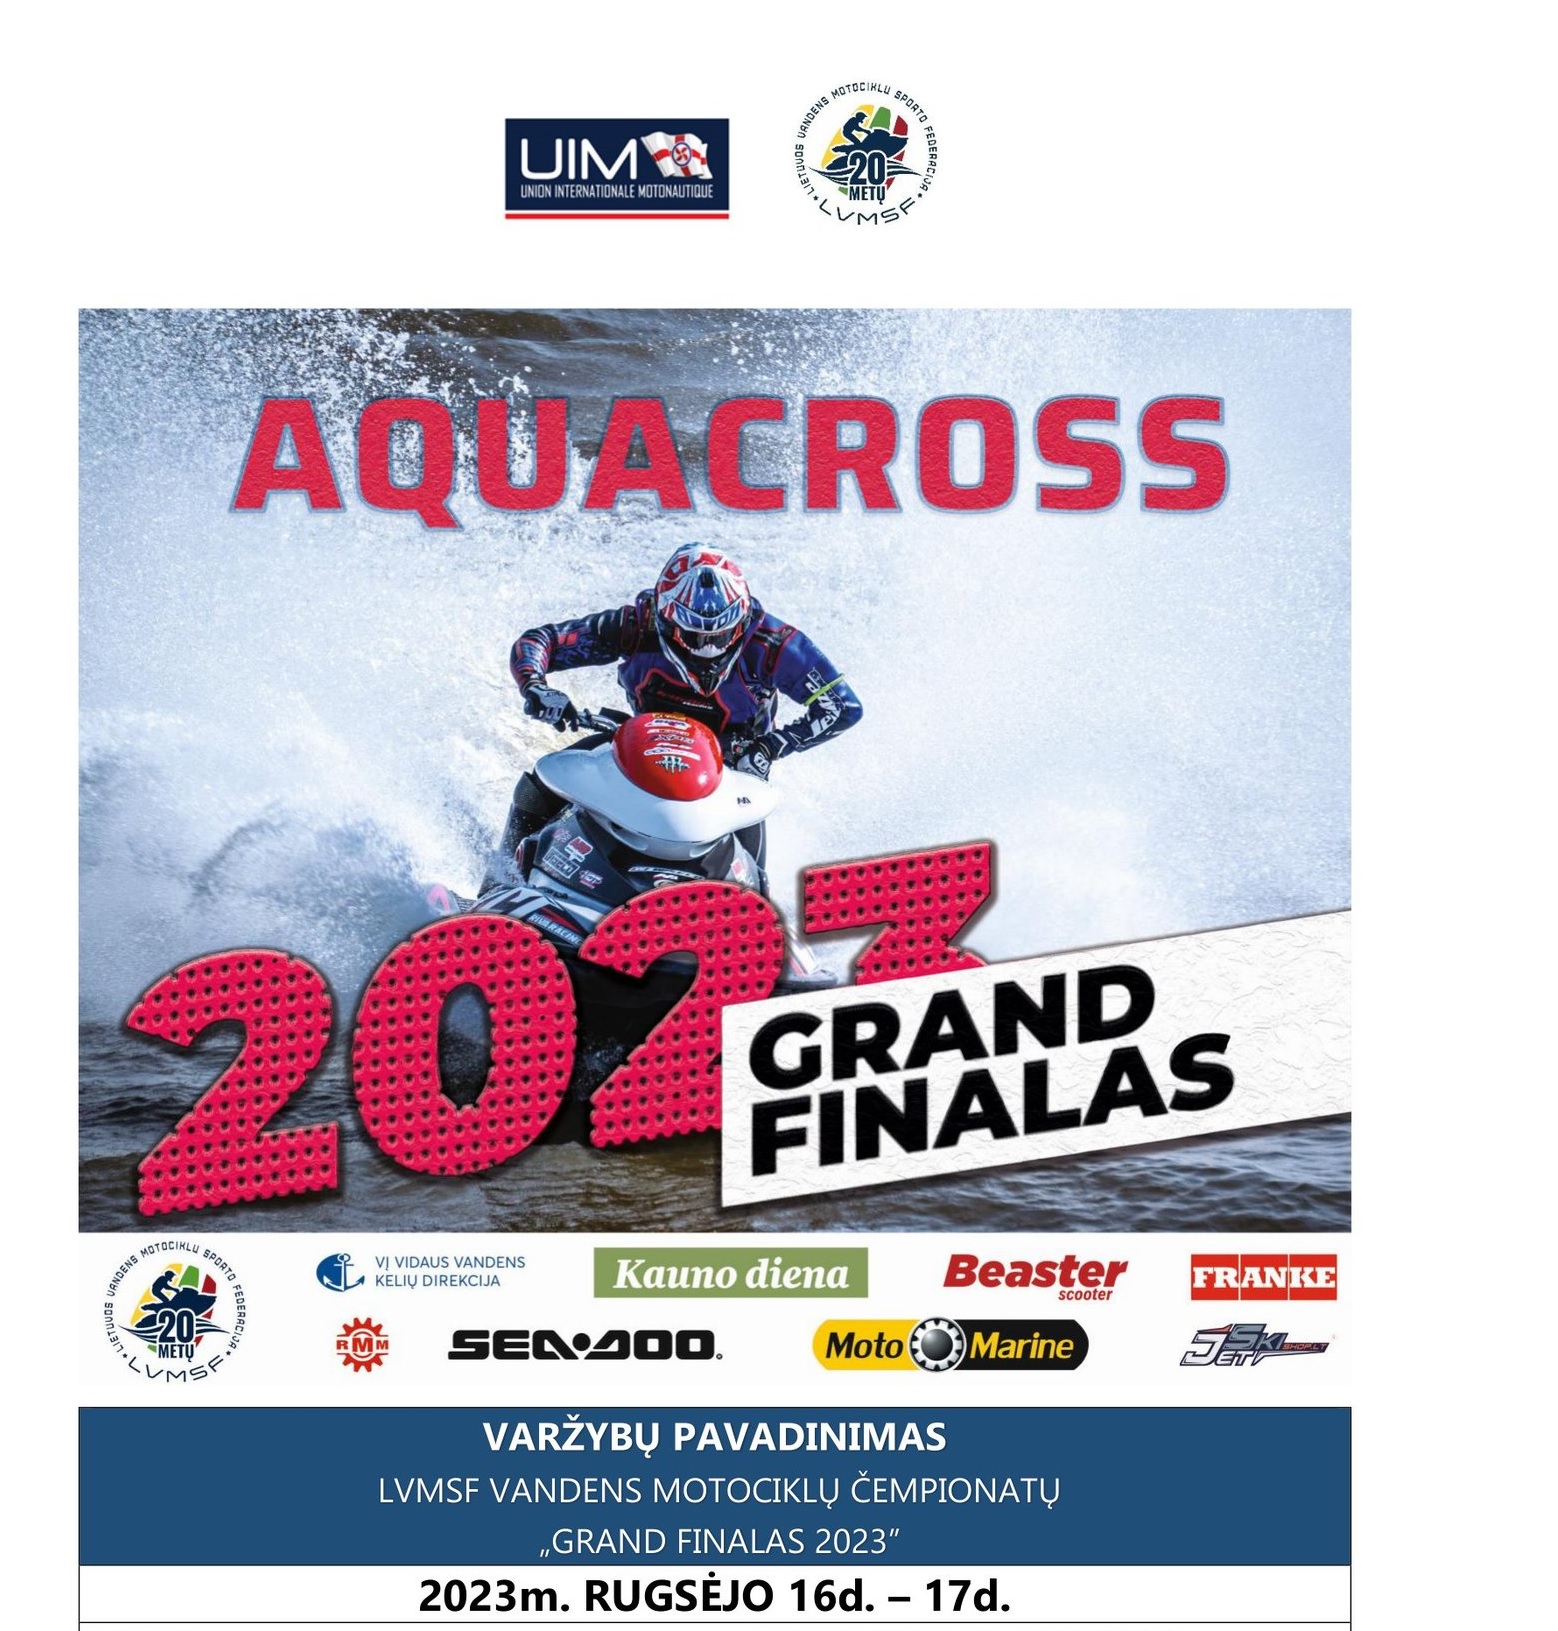 Lietuvos Aquacross "GRAND FINALAS 2023" ir "ENDURO BALTIC CUP 2023" varžybos